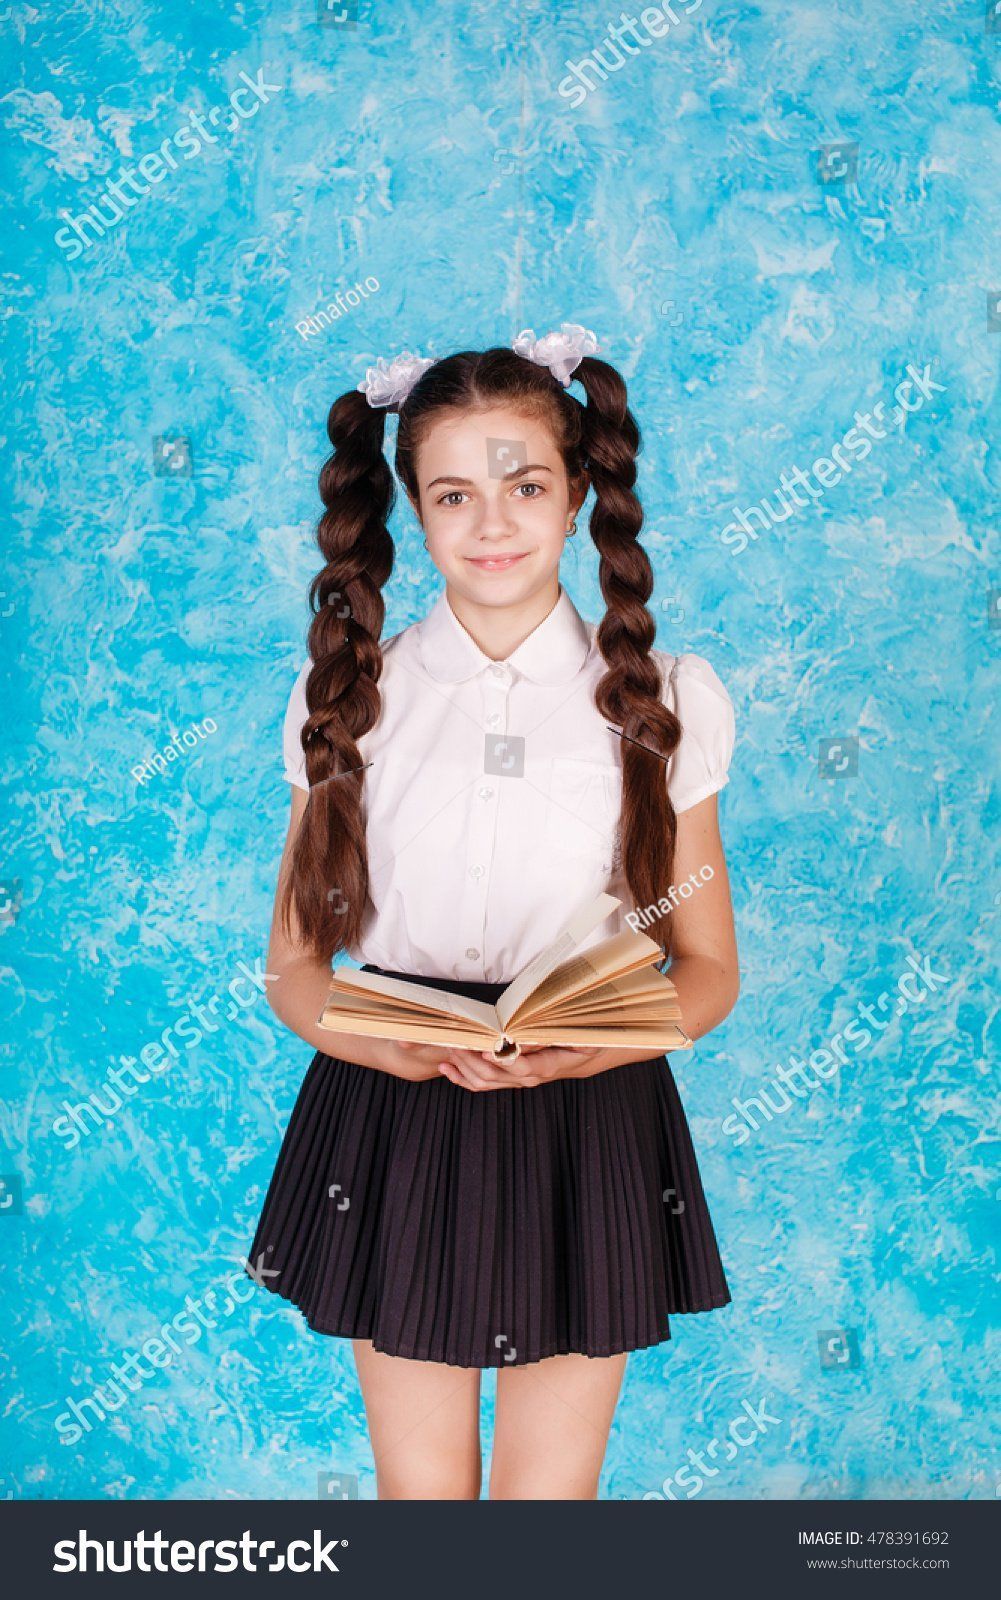 Teen young school girl